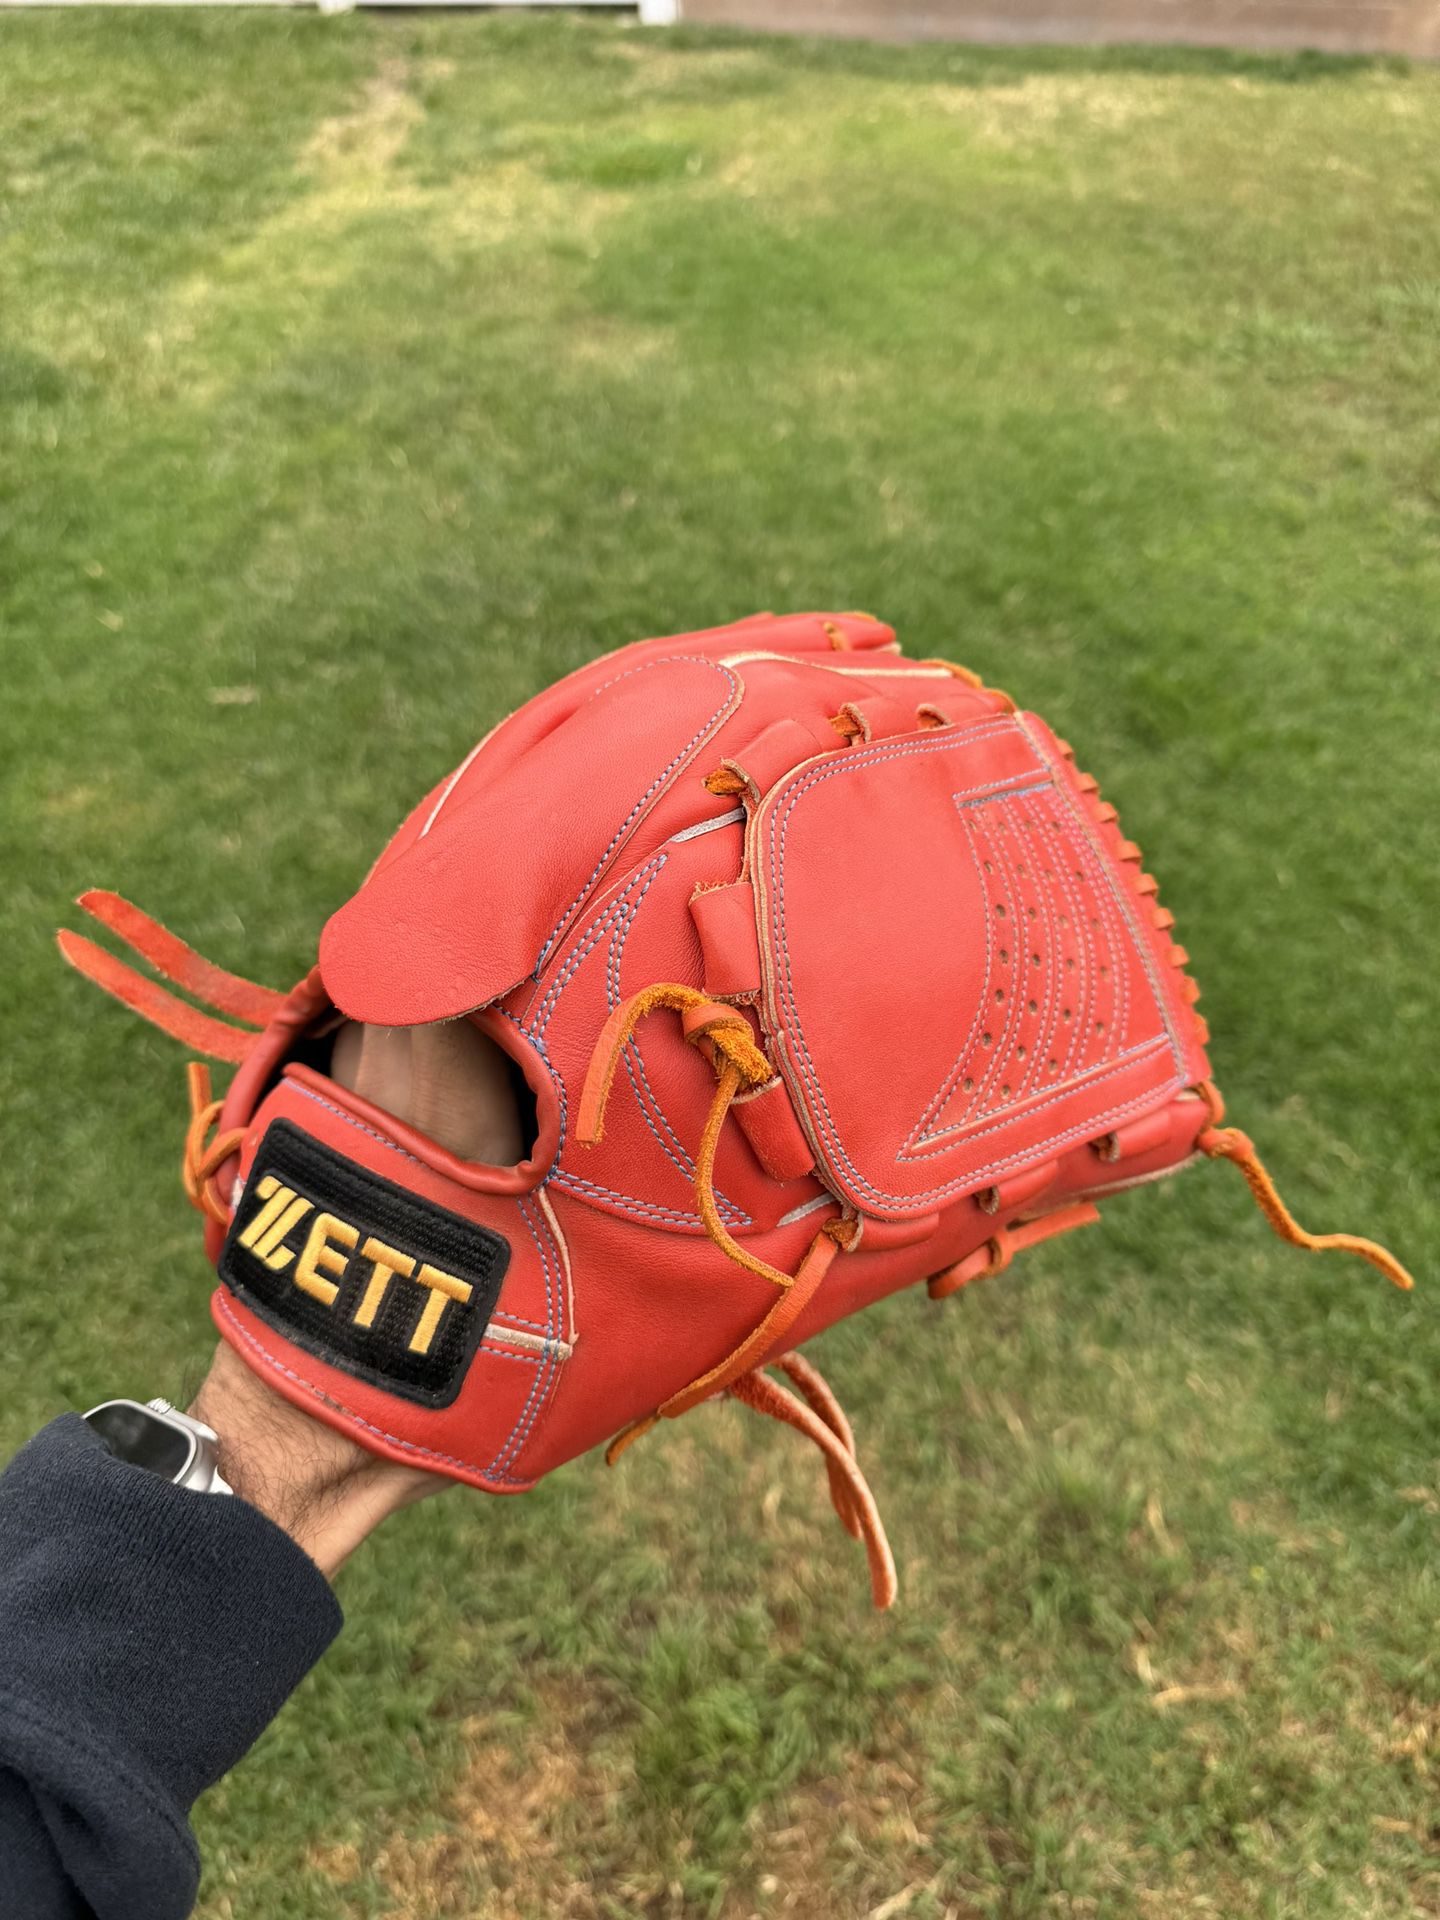 Zett 12” Baseball Pitchers Glove from Japan Gran Status